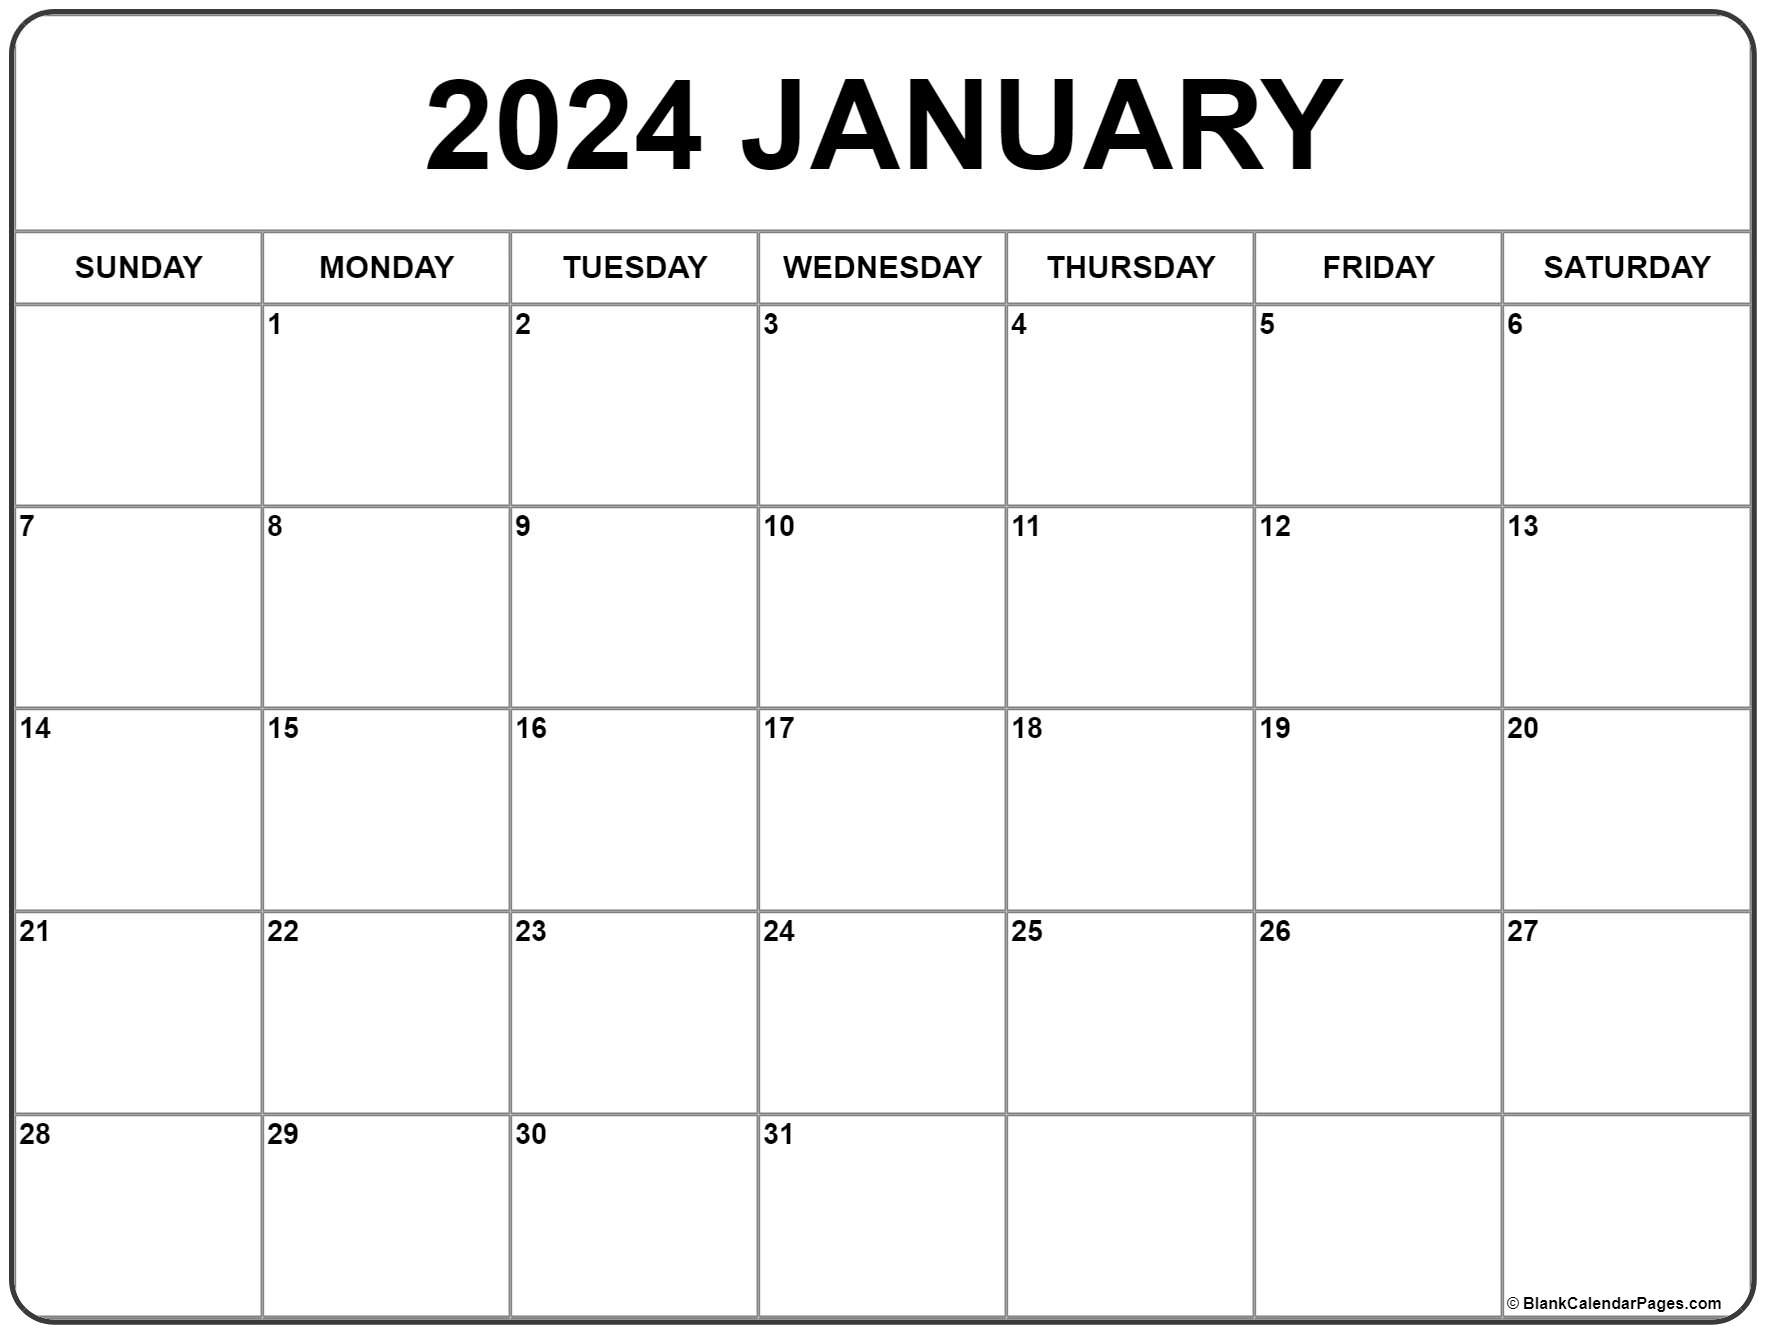 January 2024 Calendar | Free Printable Calendar for Free Printable Blank January 2024 Calendar